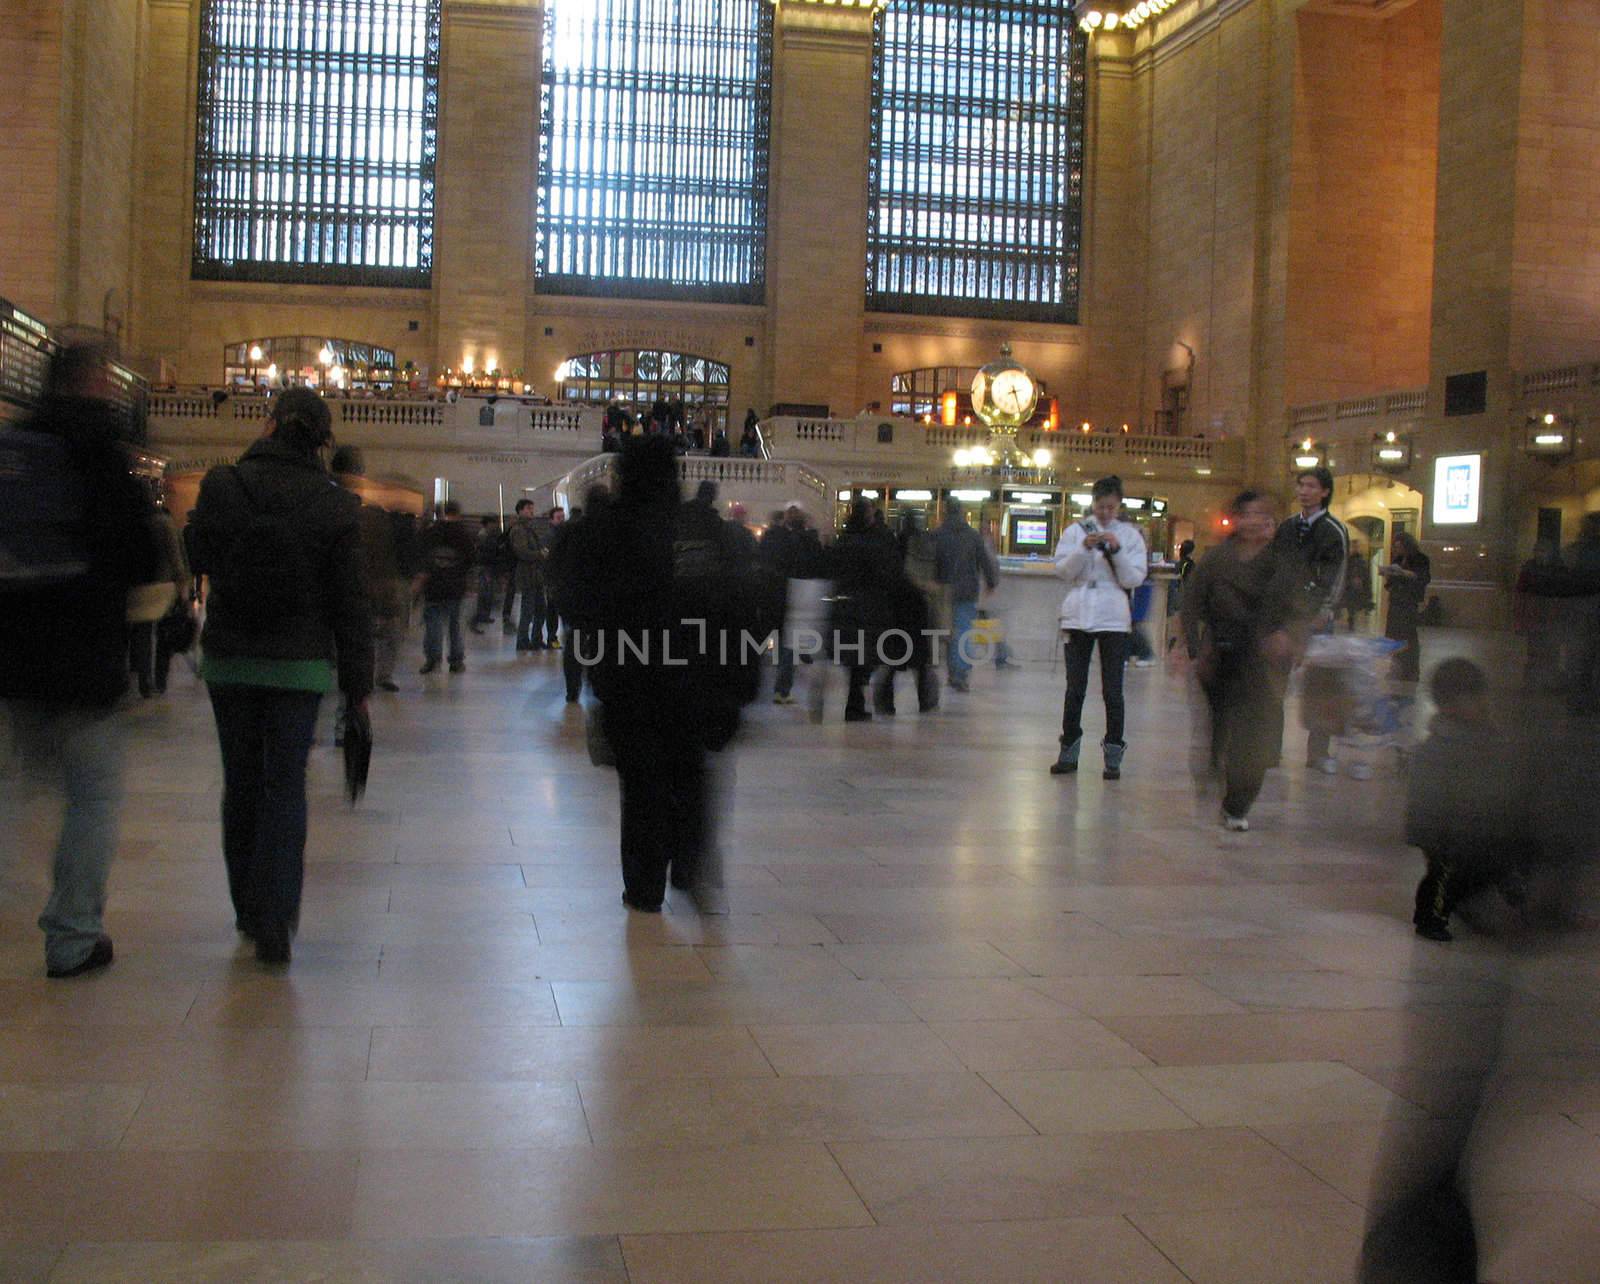 Grand Central Station, New York City